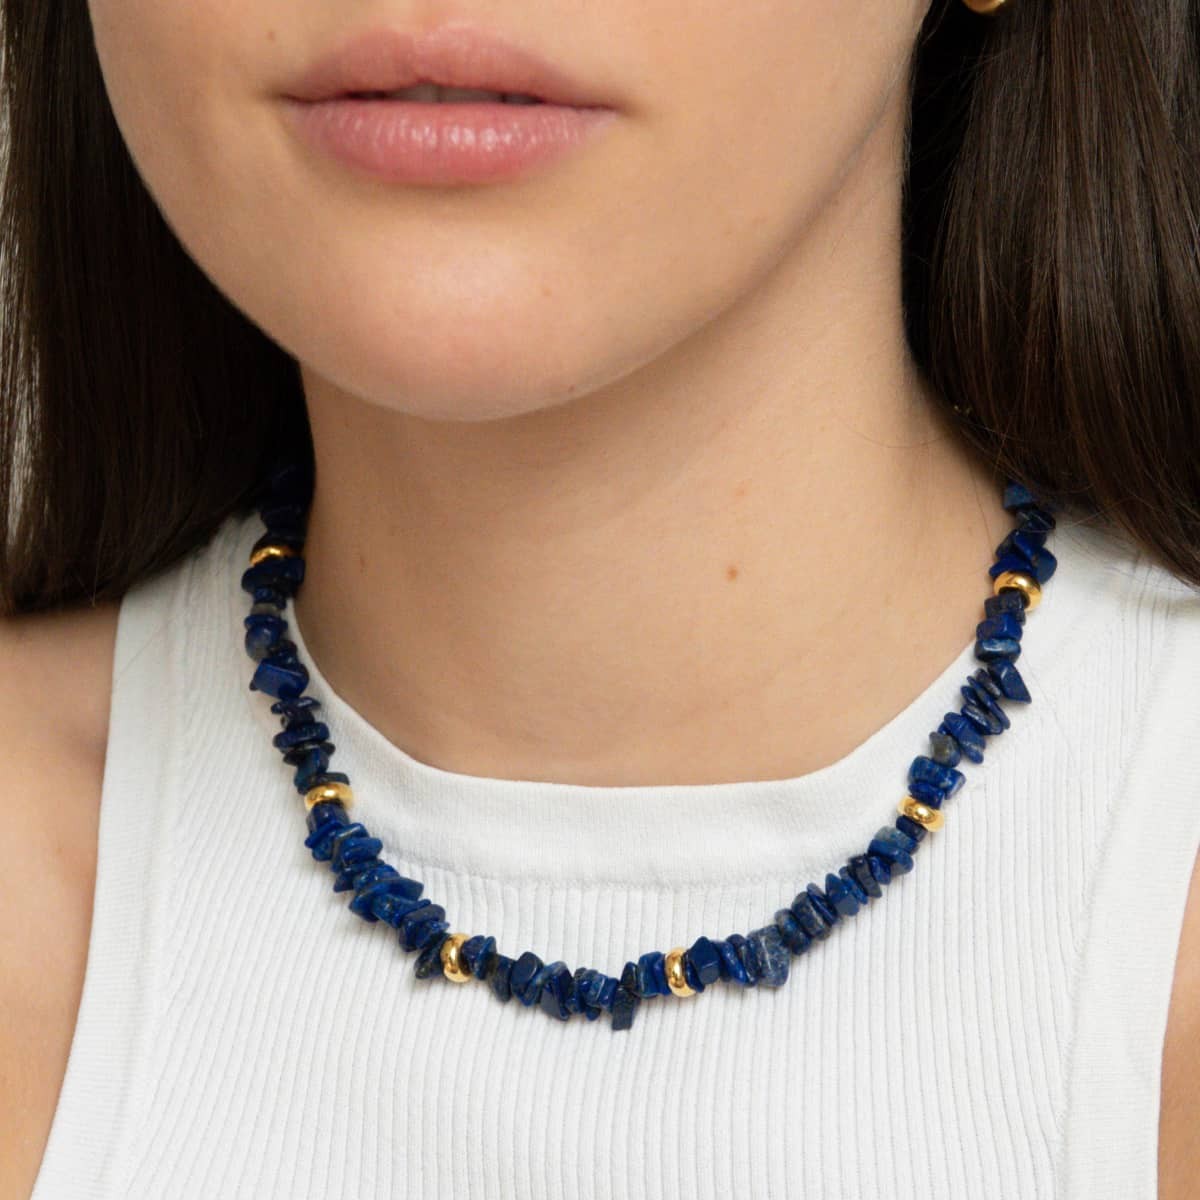 Blue Lapis Chain without Pearl - Halsketten - 18k vergoldet